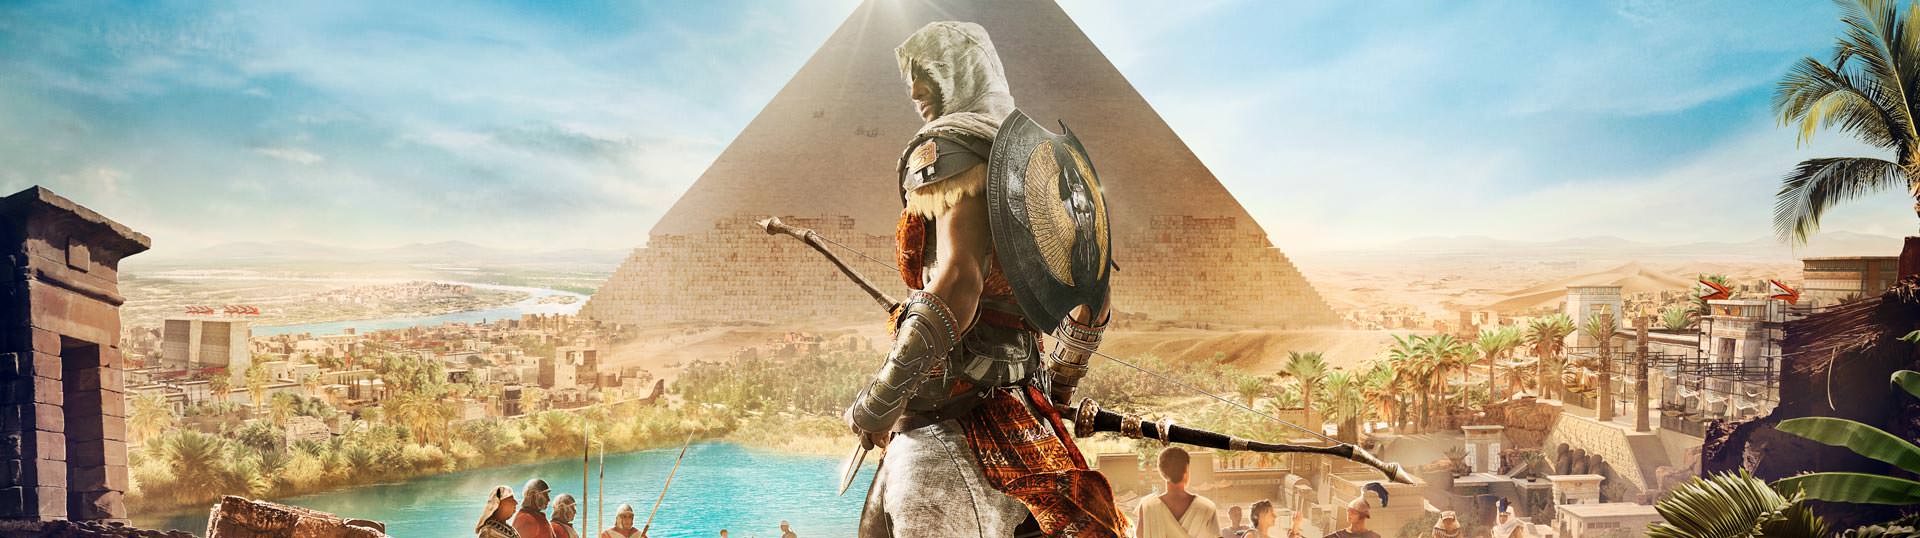  Ubisoft Assassin's Creed Origins, PS4 Basic